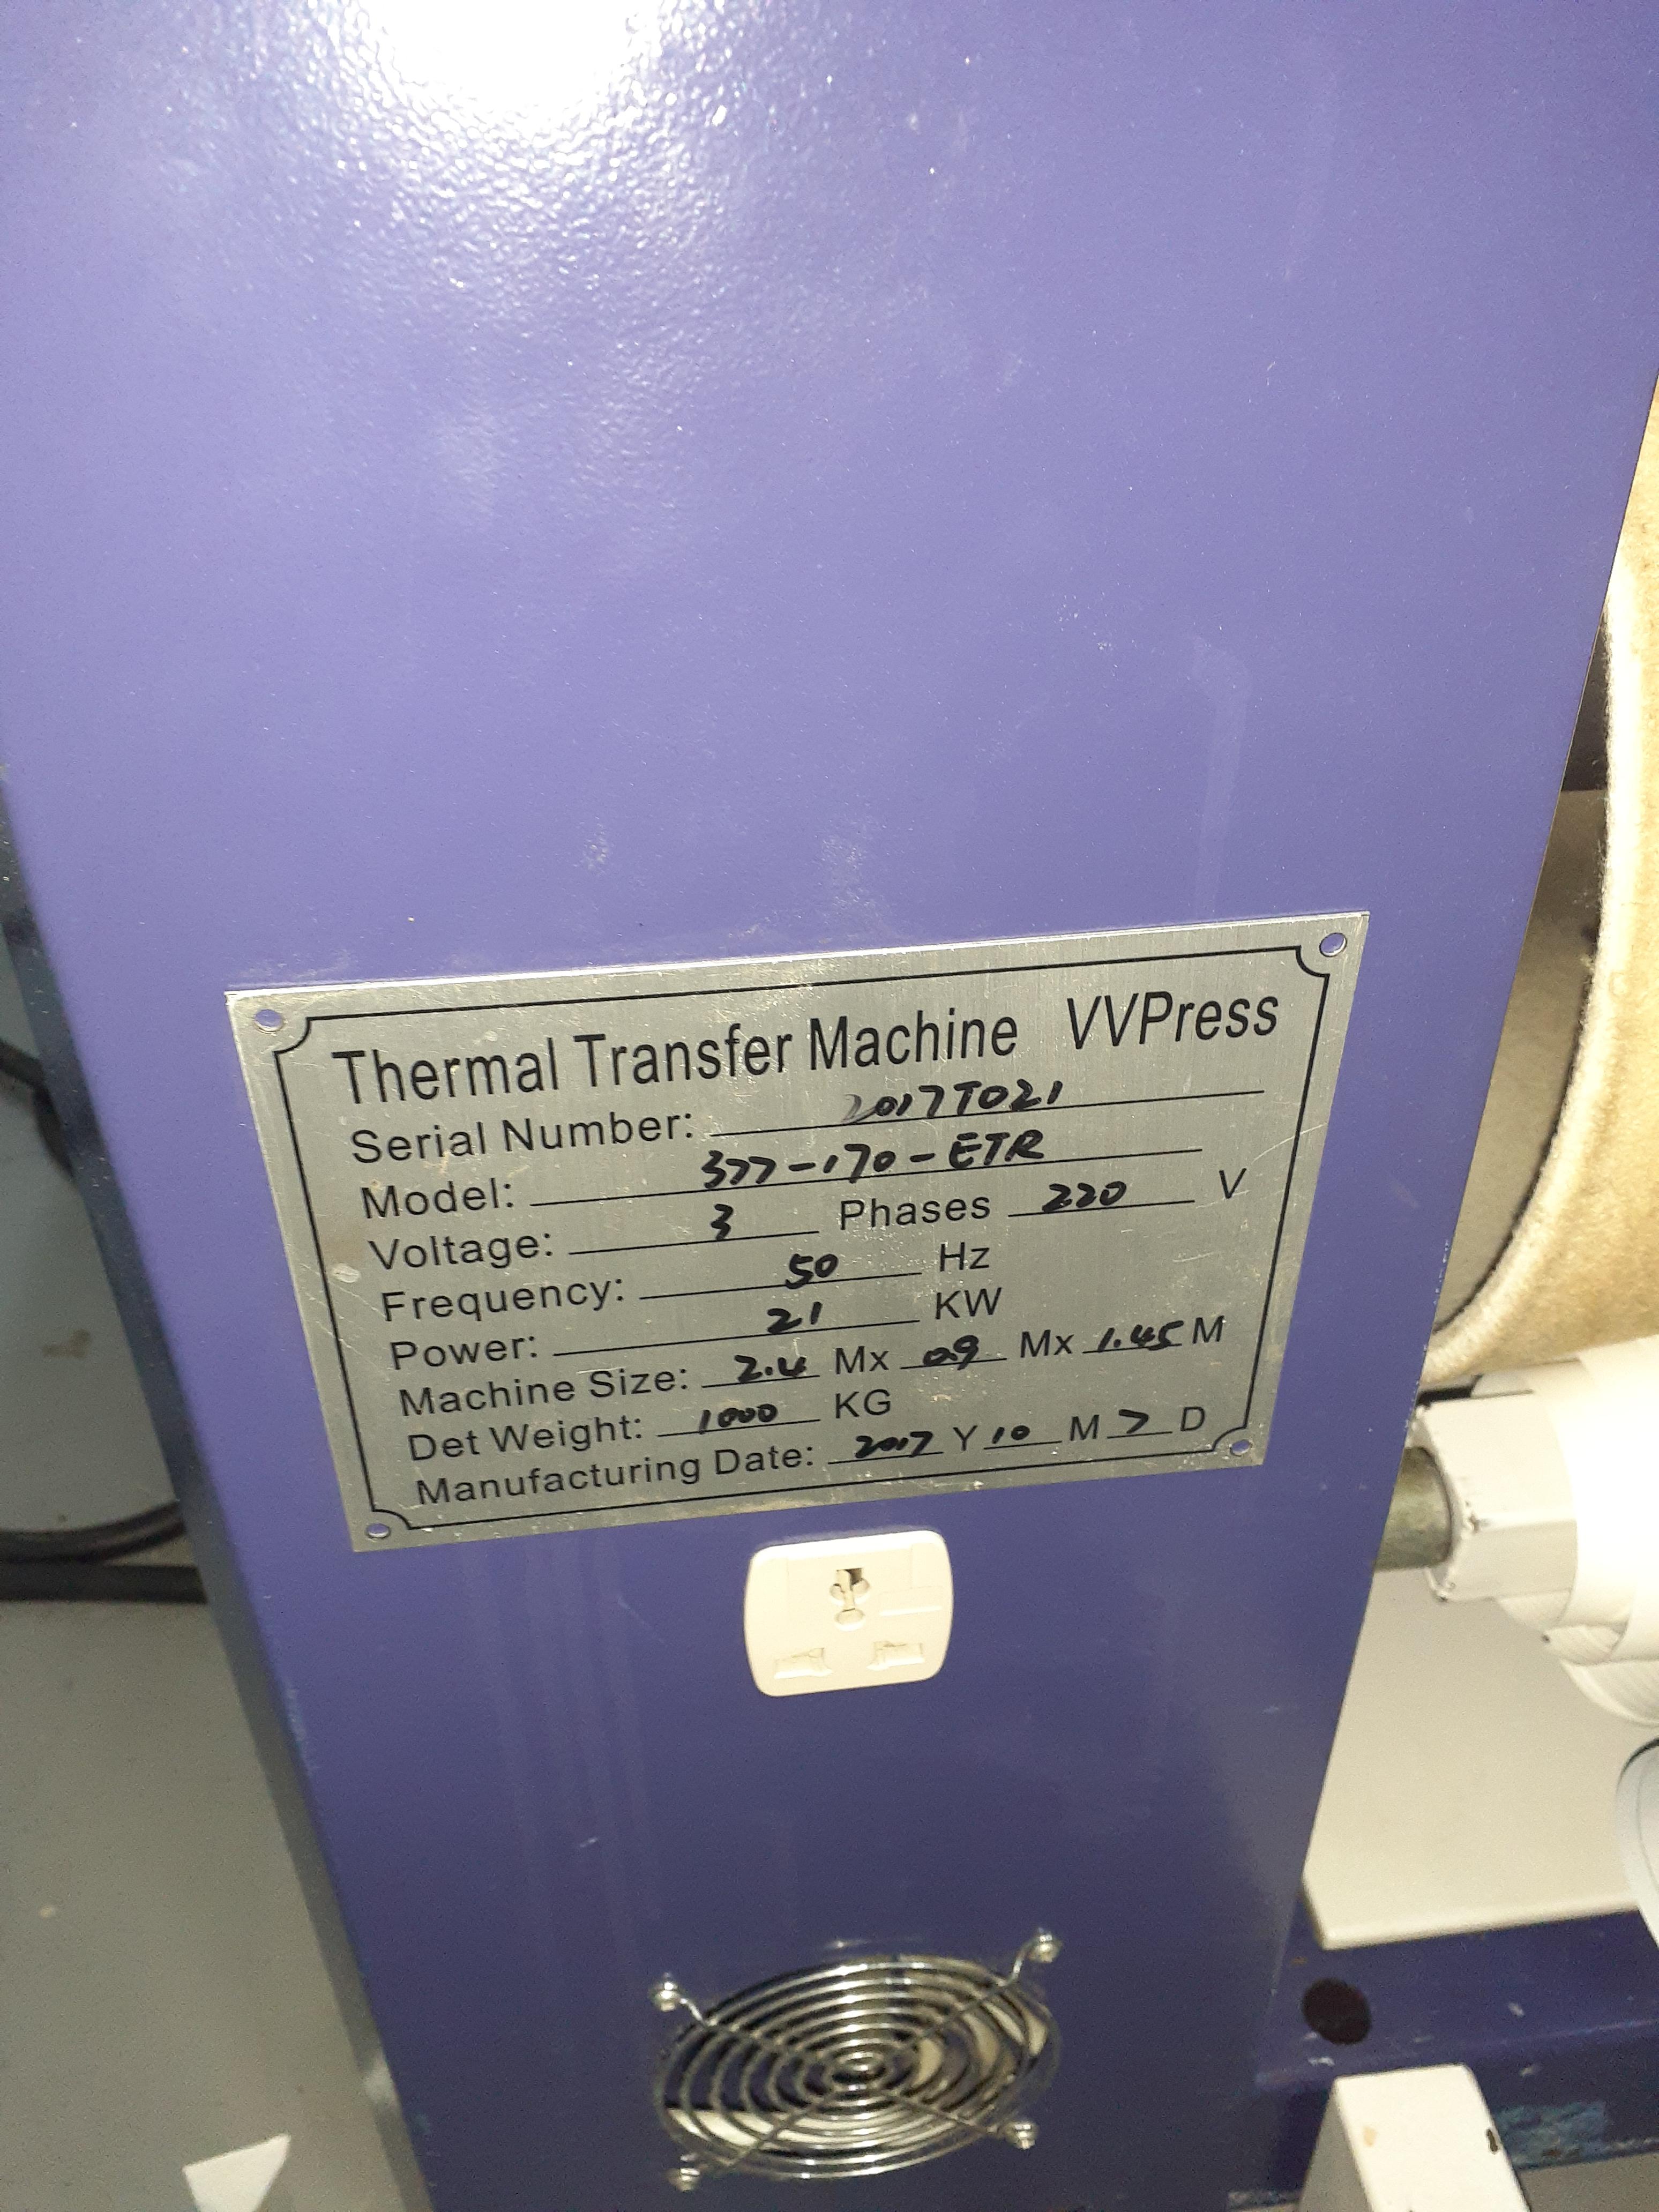 Themal Transfer Machine - VVPress - 377-170-ETR